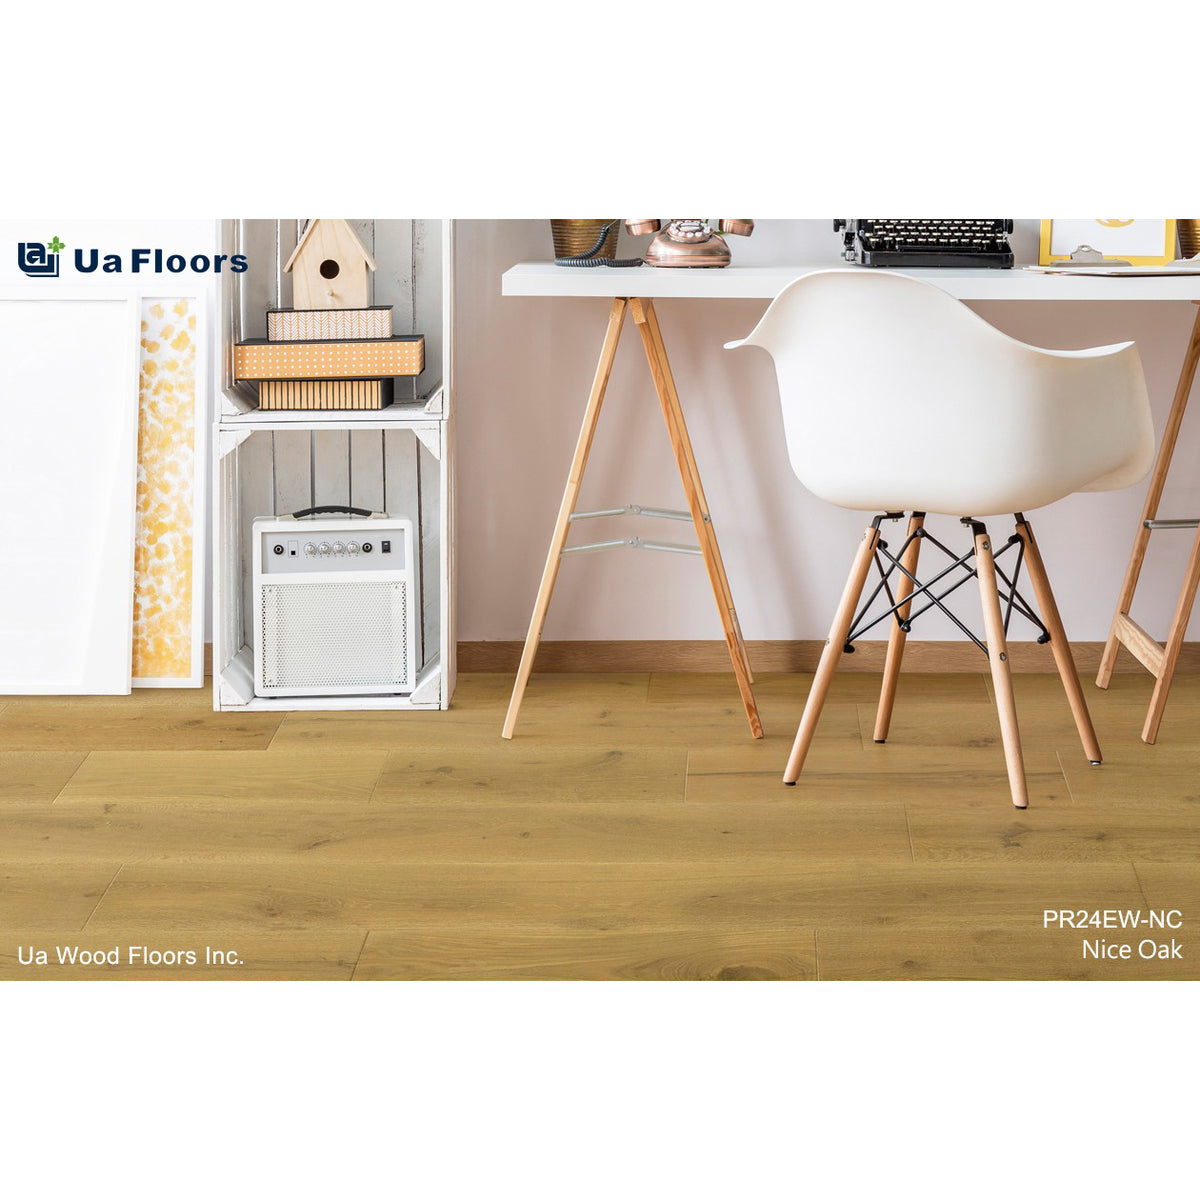 Ua Floors - The Parisian Series - Nice Euro Oak Room Scene